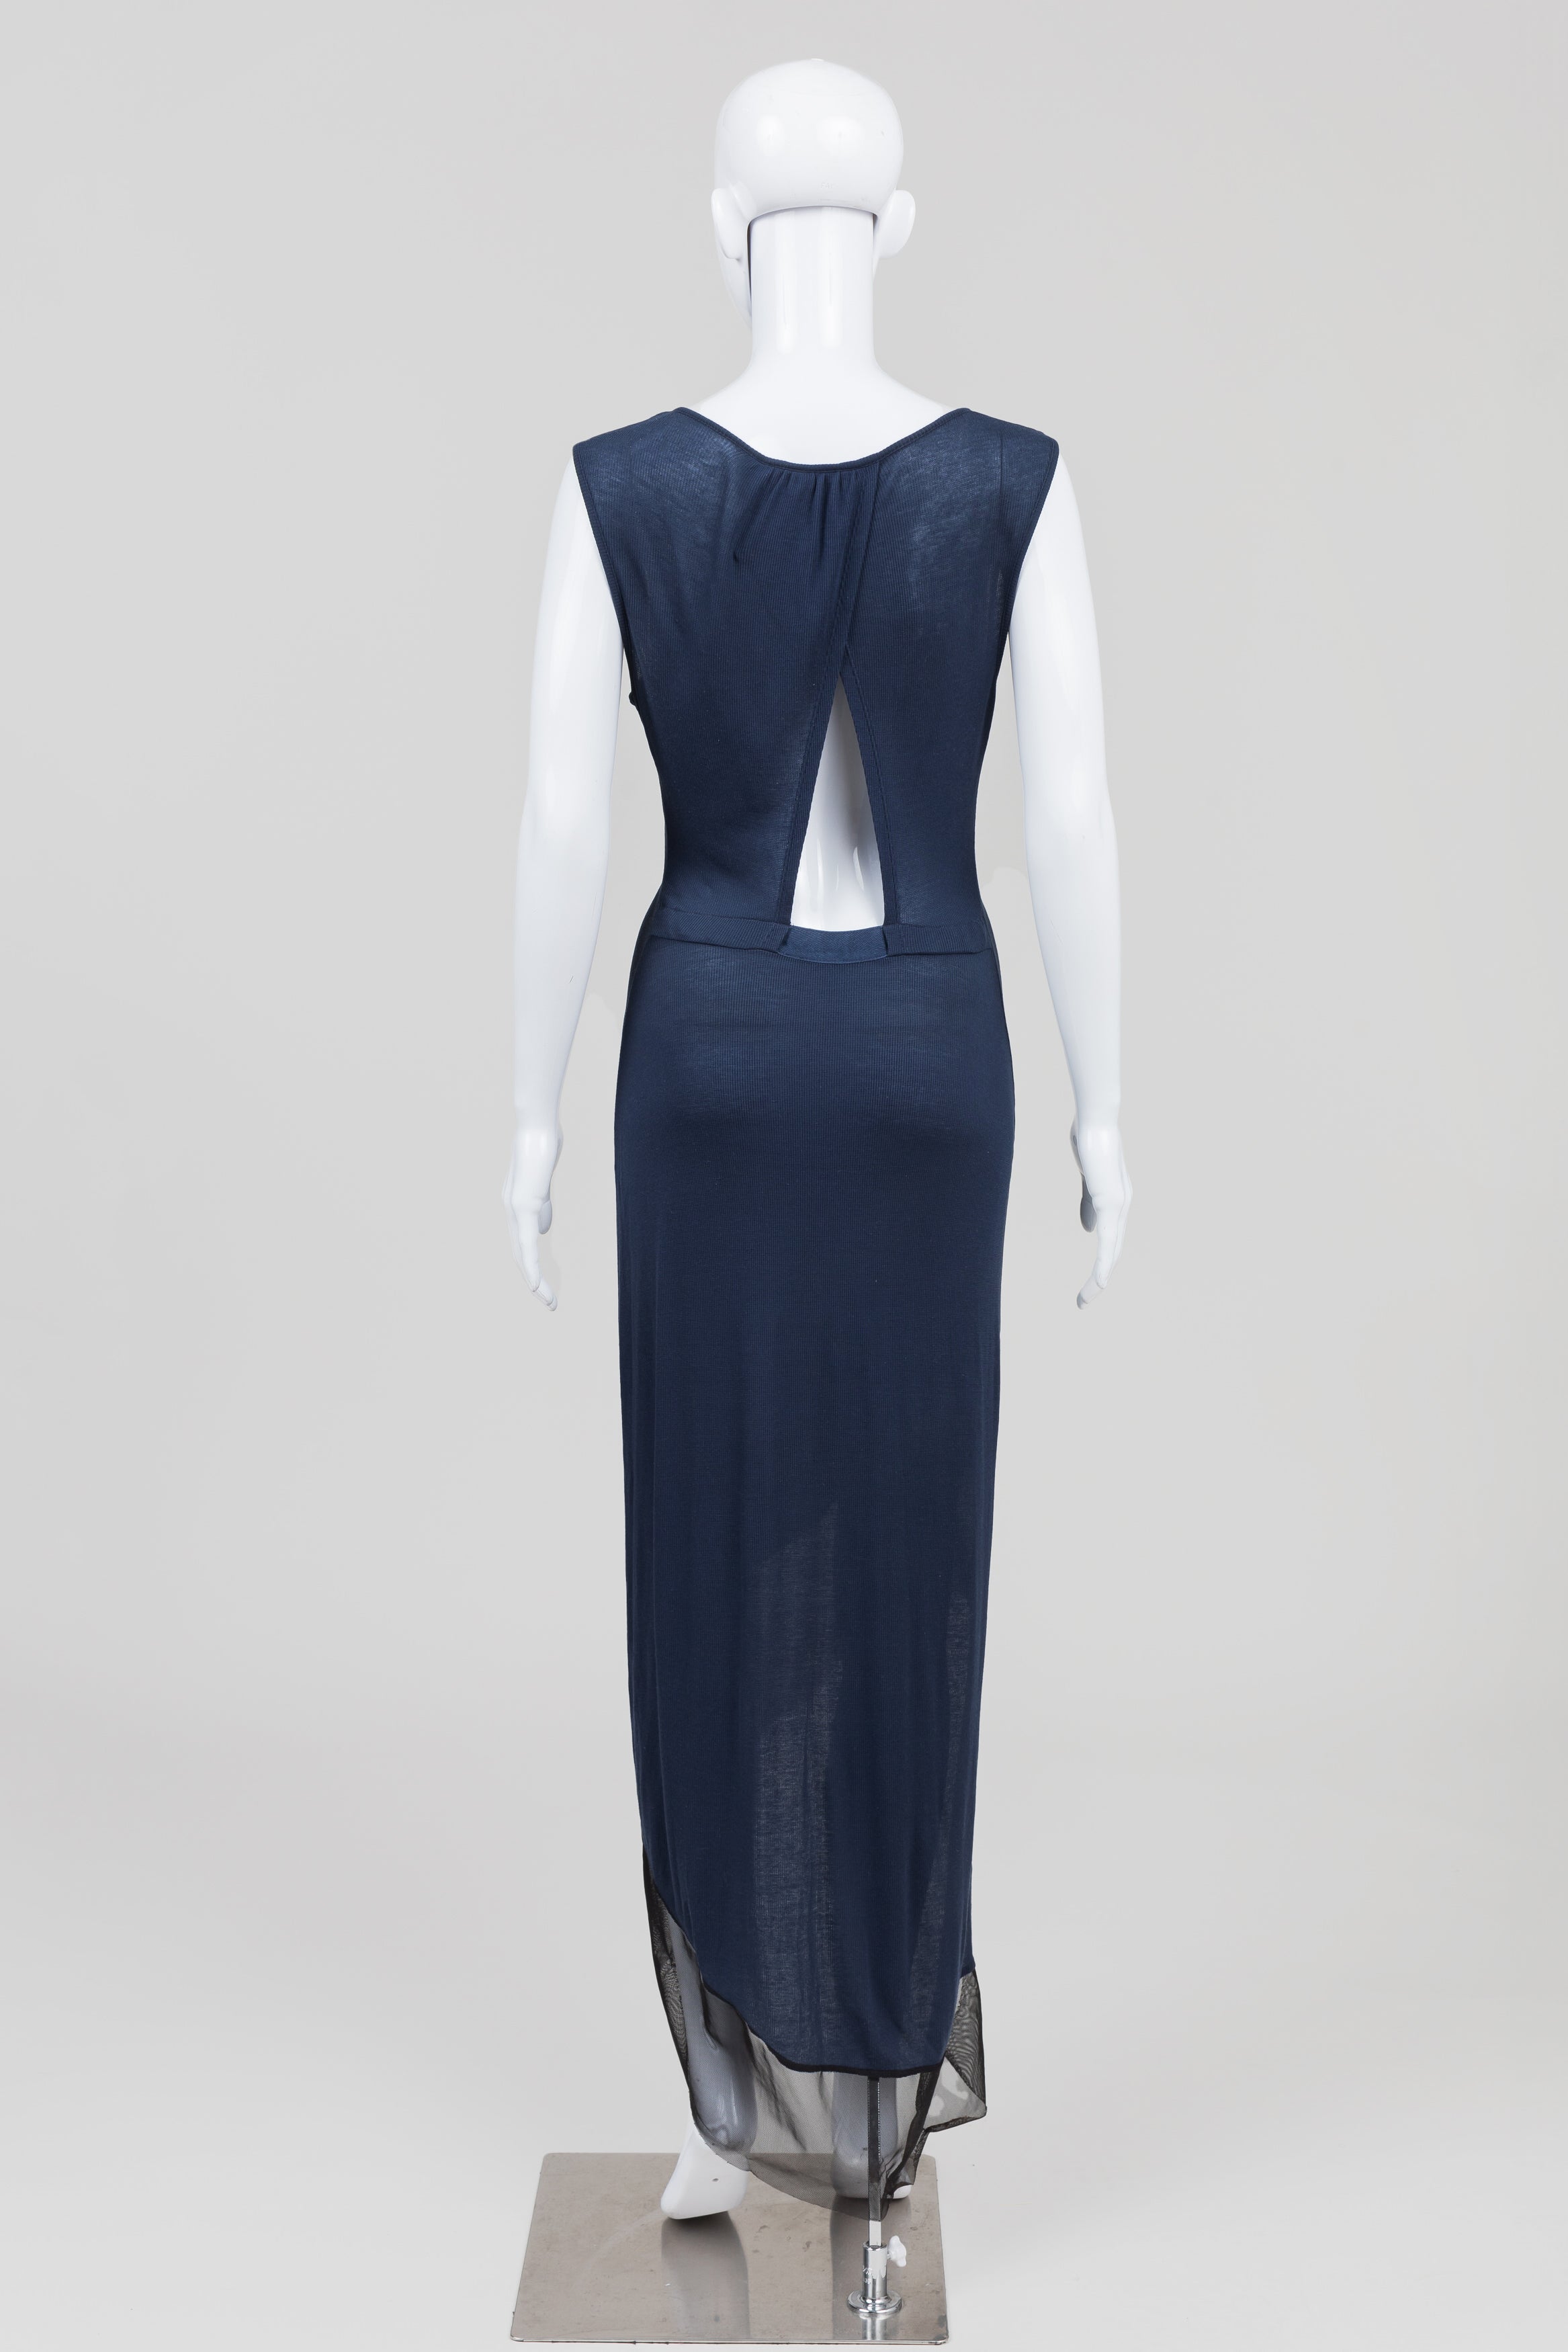 BCBG MaxAzria Blue Rib Knit Sleeveless Dress w/ Assymetrical Hem (XS)